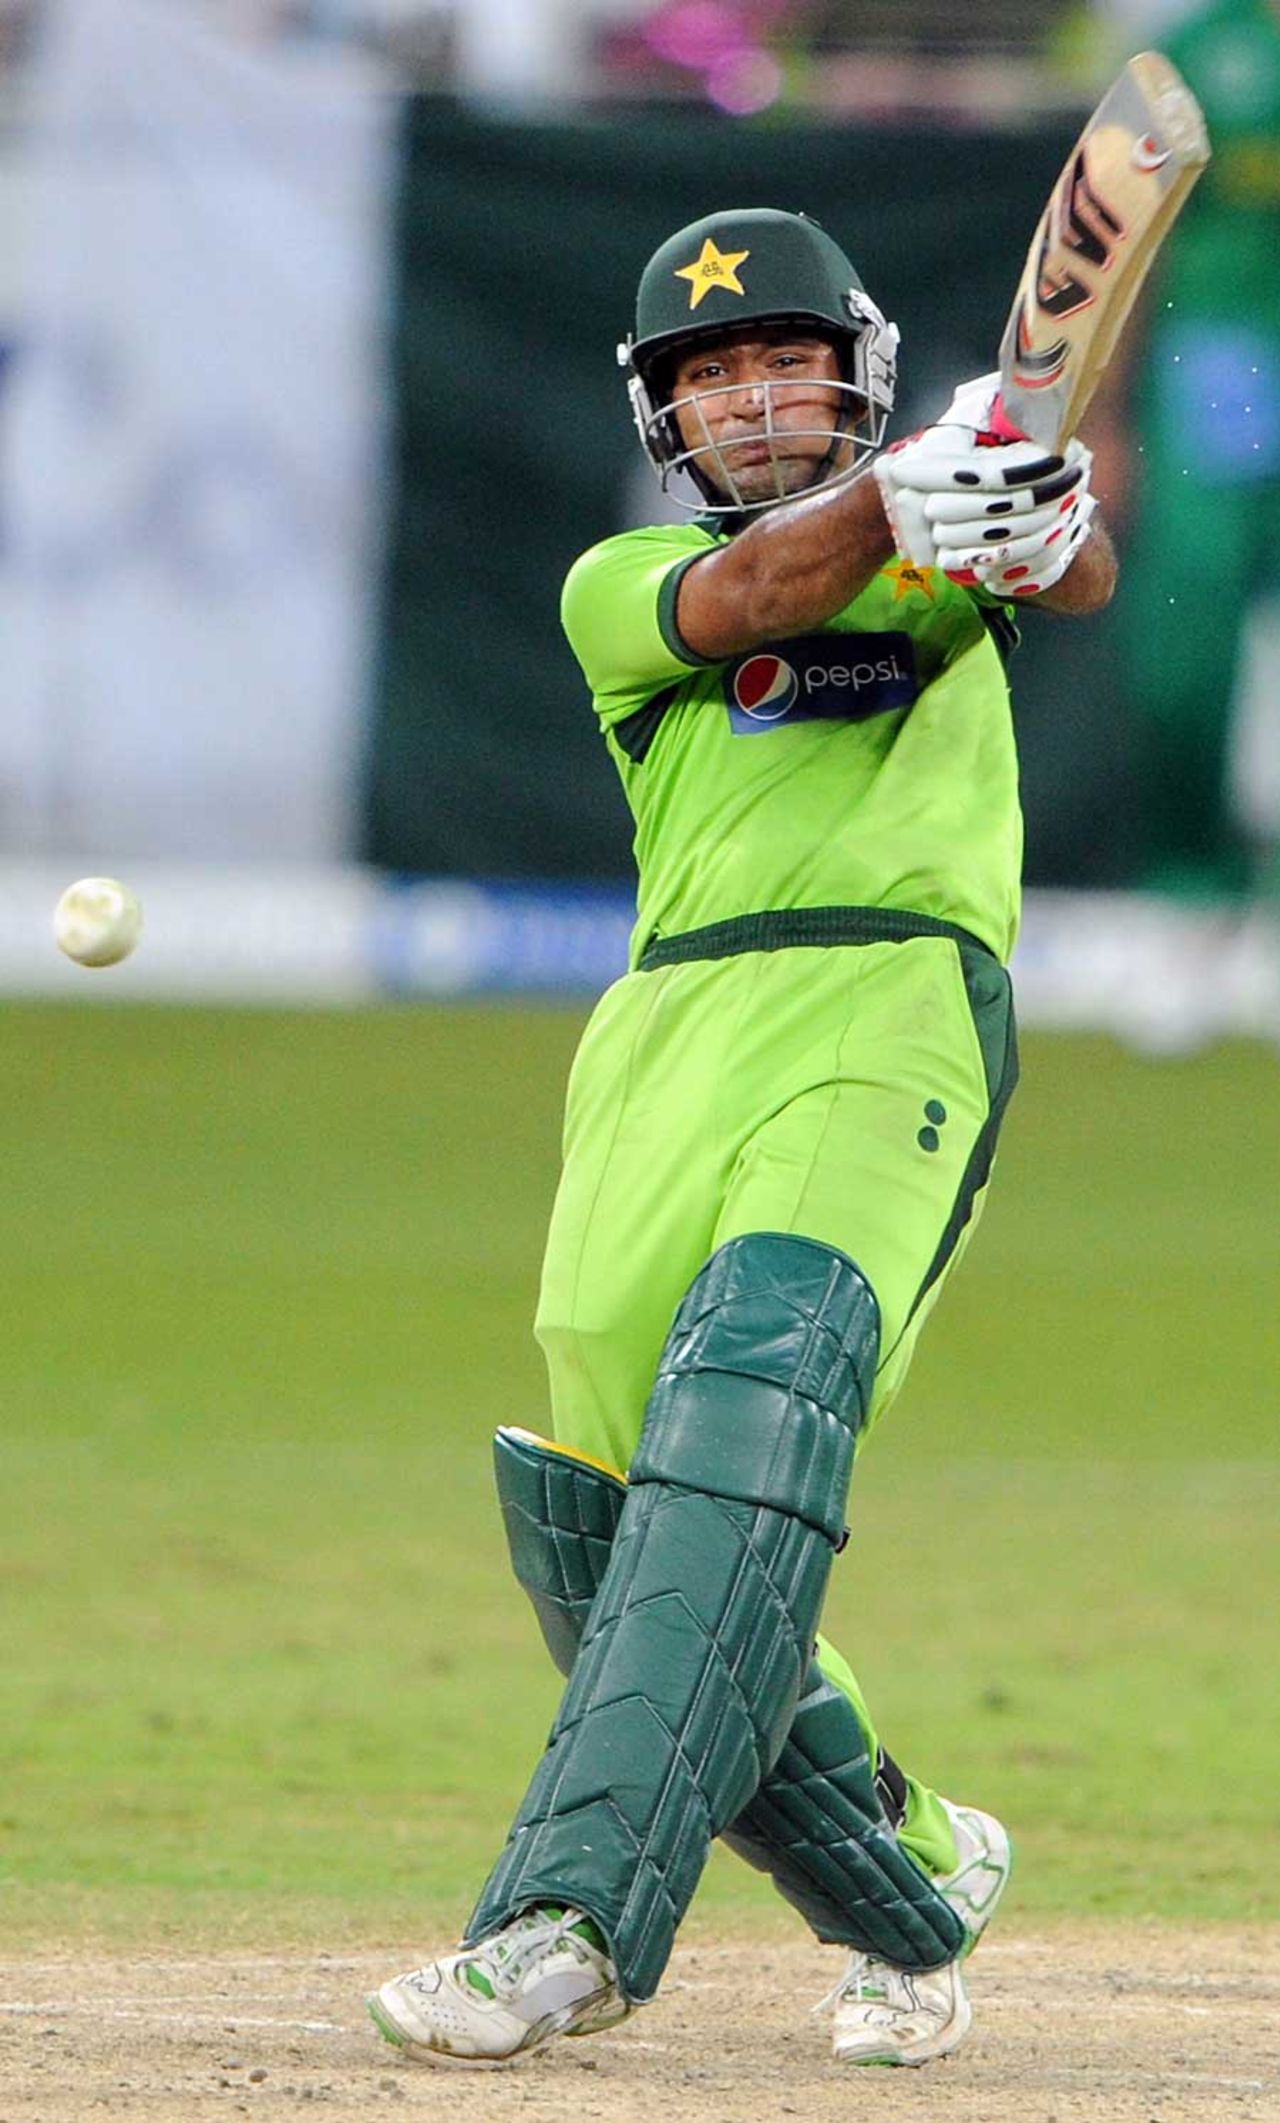 Asad Shafiq played neatly before being run out, Pakistan v South Africa, 4th ODI, Dubai, November 5, 2010